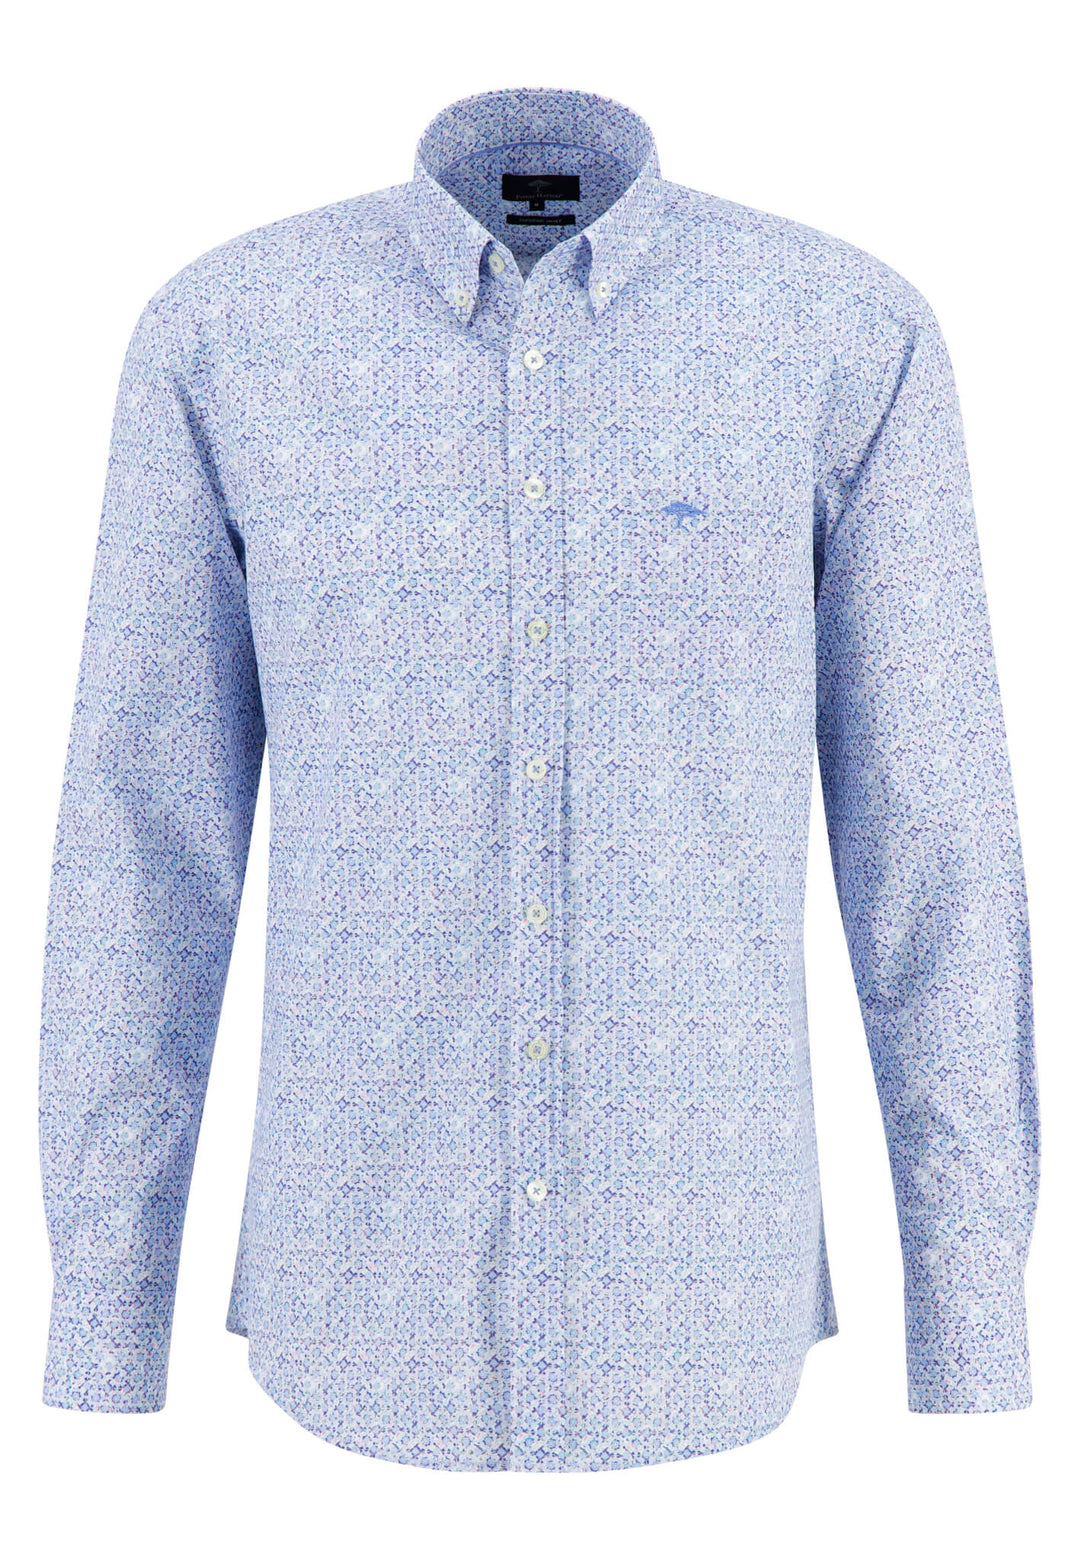 Shop Superior – Online FYNCH-HATTON Print Offizieller Shirt | Cotton